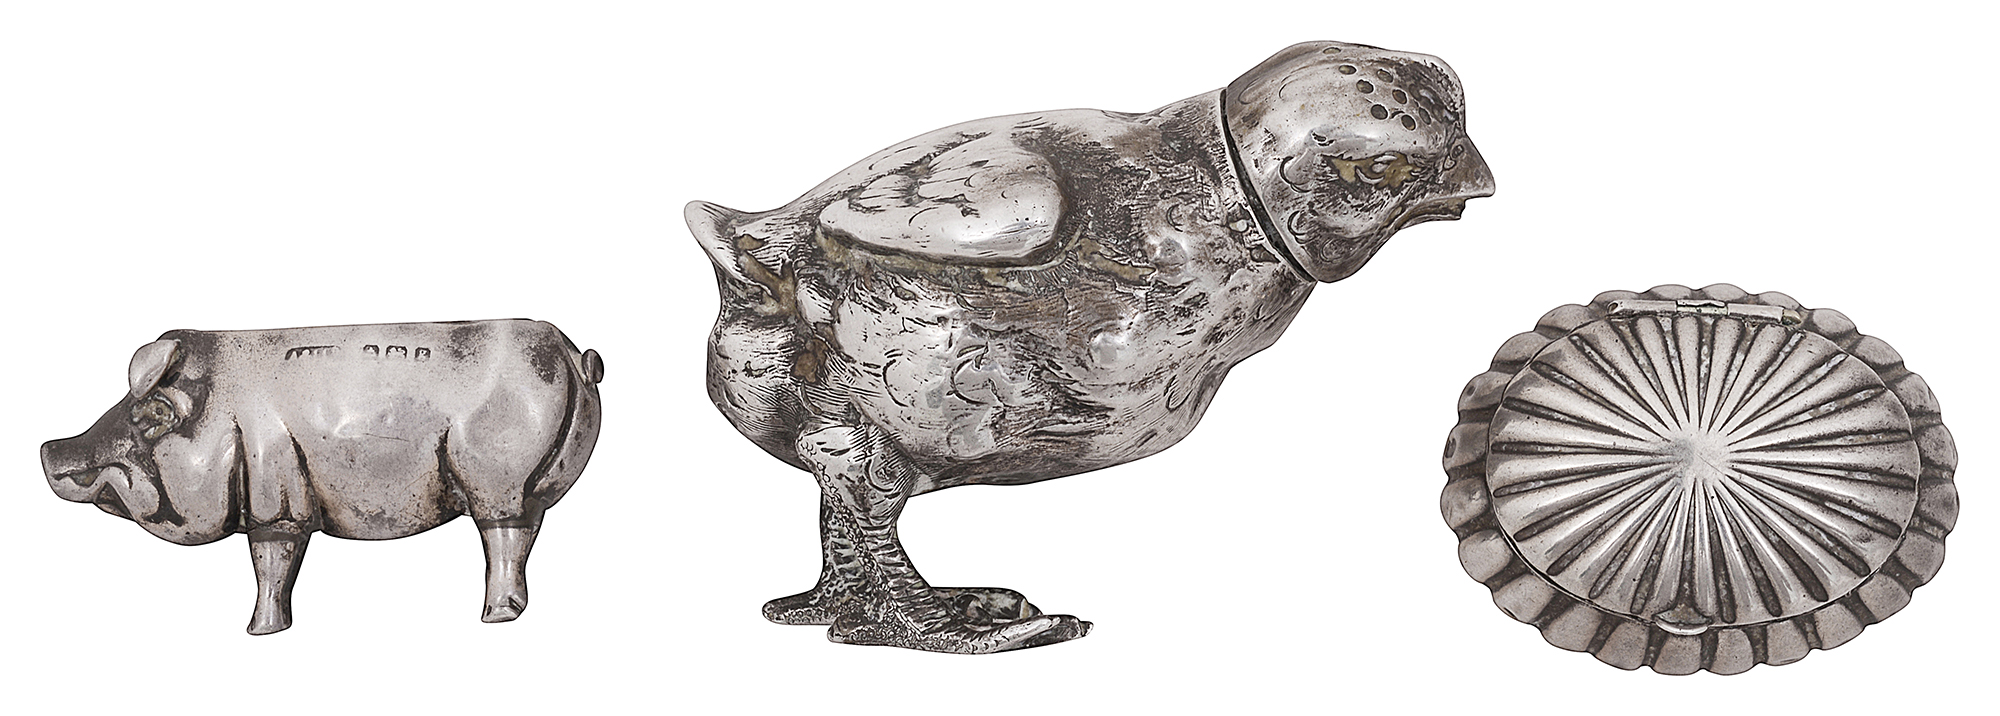 A German novelty .800 naturalistic silver chick pepper pot, an Edwardian novelty pig pincushion and